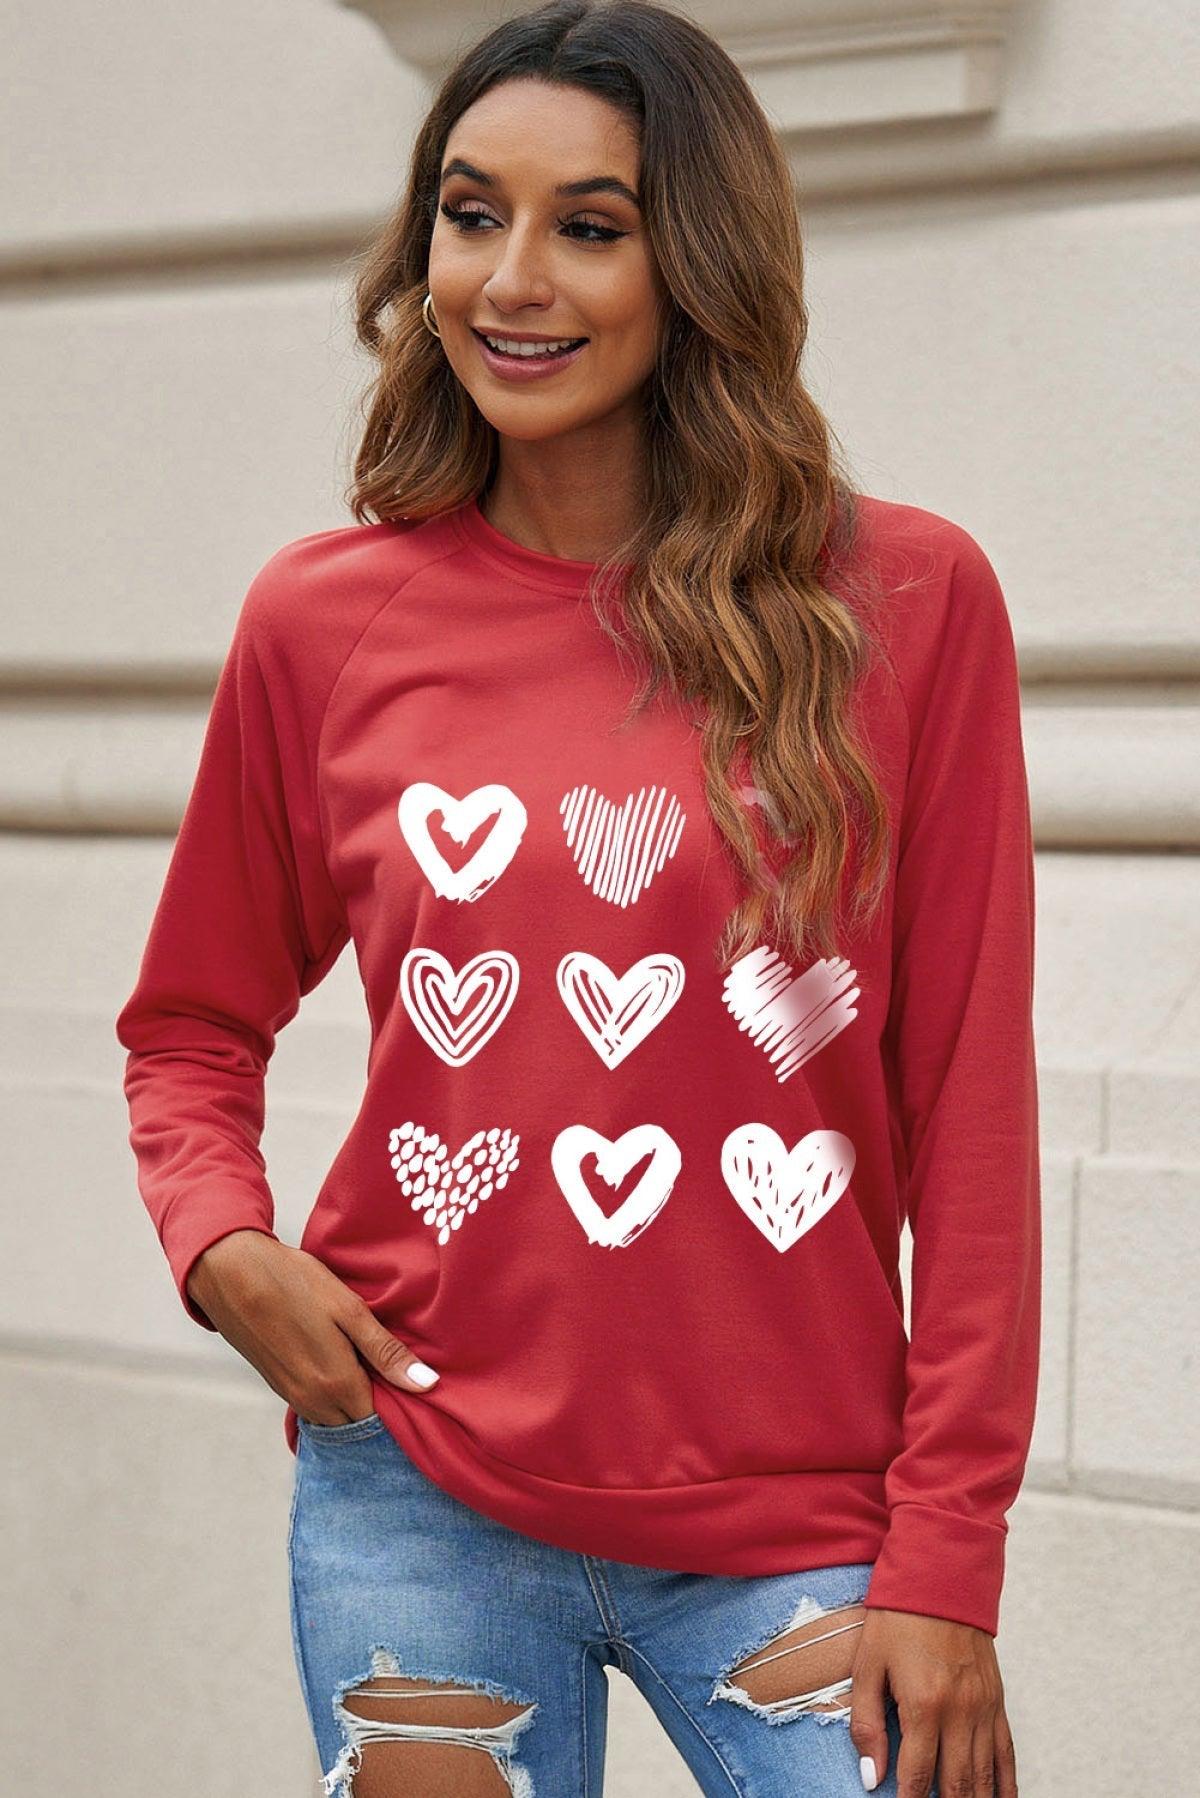 Red Hearts Print Crewneck Long Sleeve Sweatshirt - That’s So Fletch Boutique 